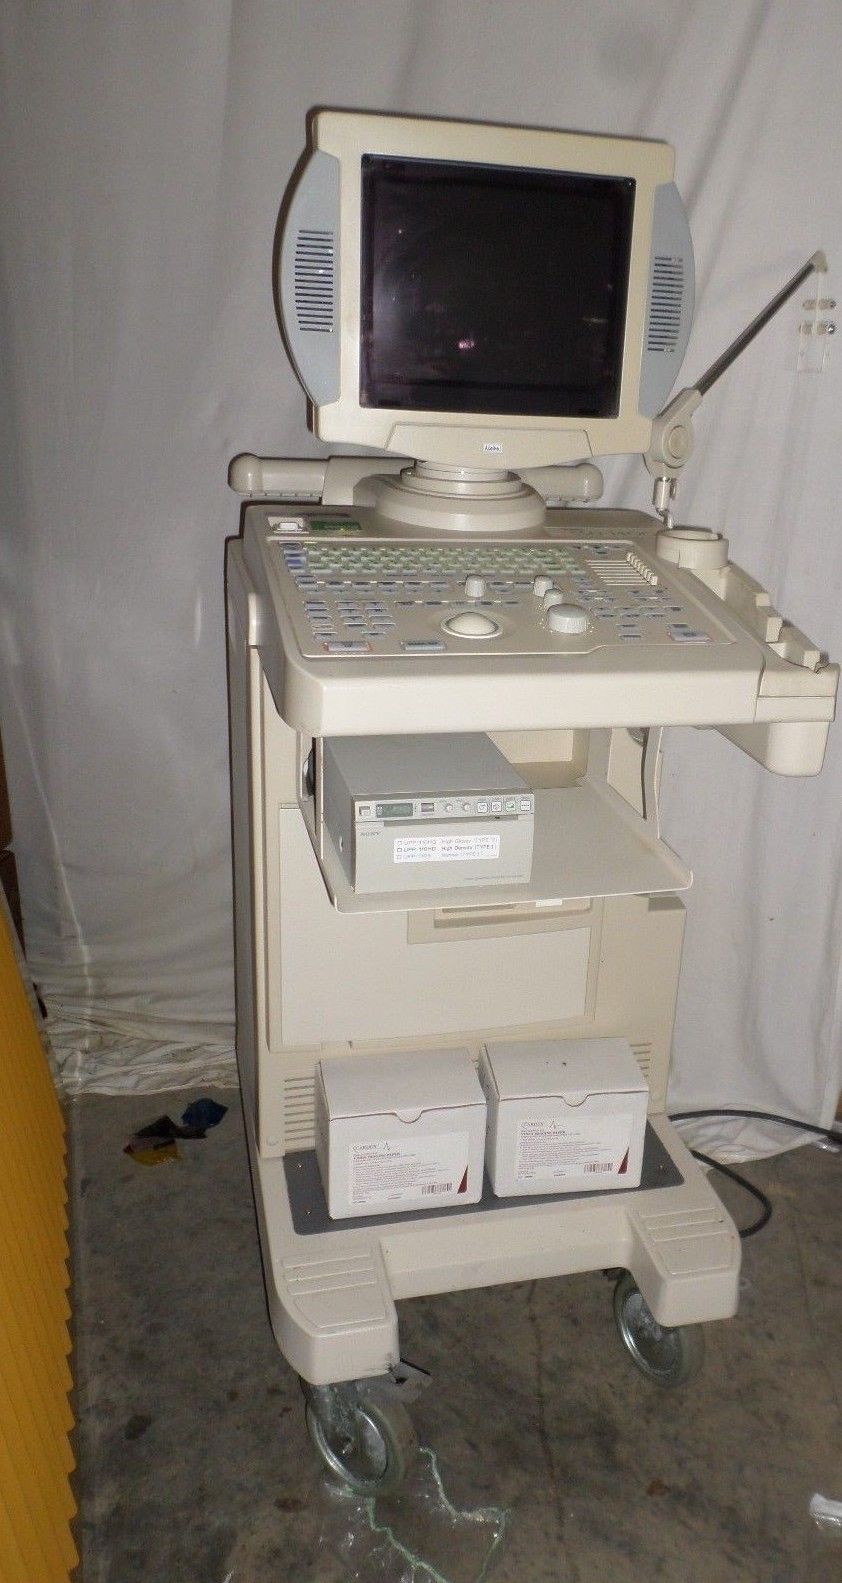 Aloka SSD-1400 Ultrasound No Probes DIAGNOSTIC ULTRASOUND MACHINES FOR SALE